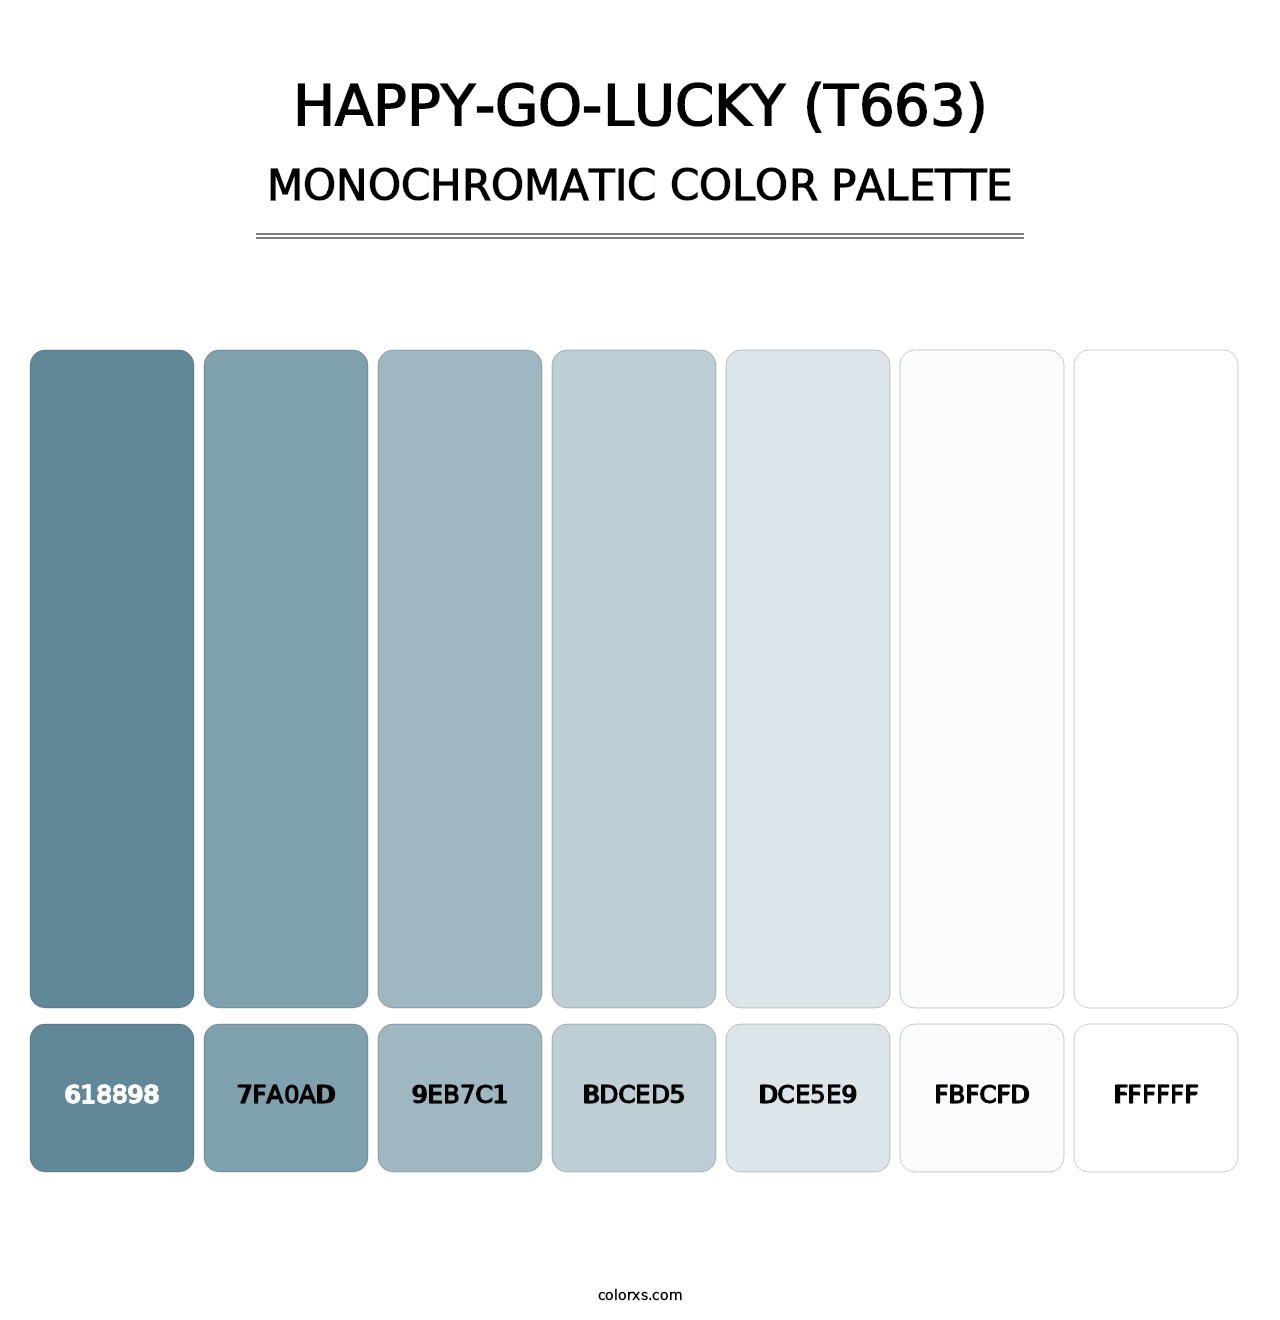 Happy-Go-Lucky (T663) - Monochromatic Color Palette